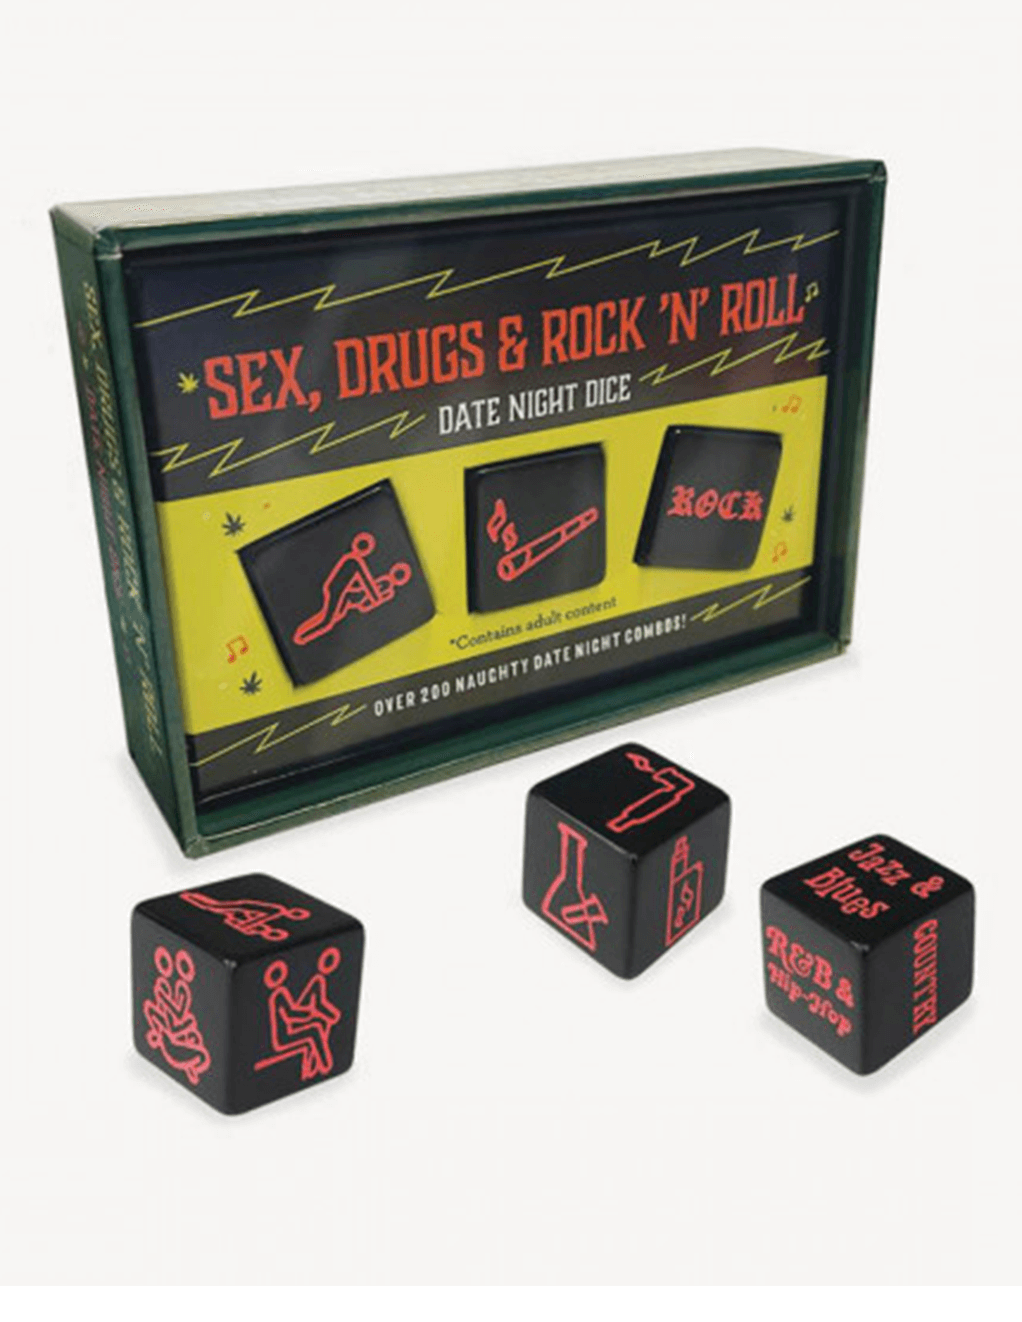 Sex, Drugs & Rock N' Roll Dice Game - Main